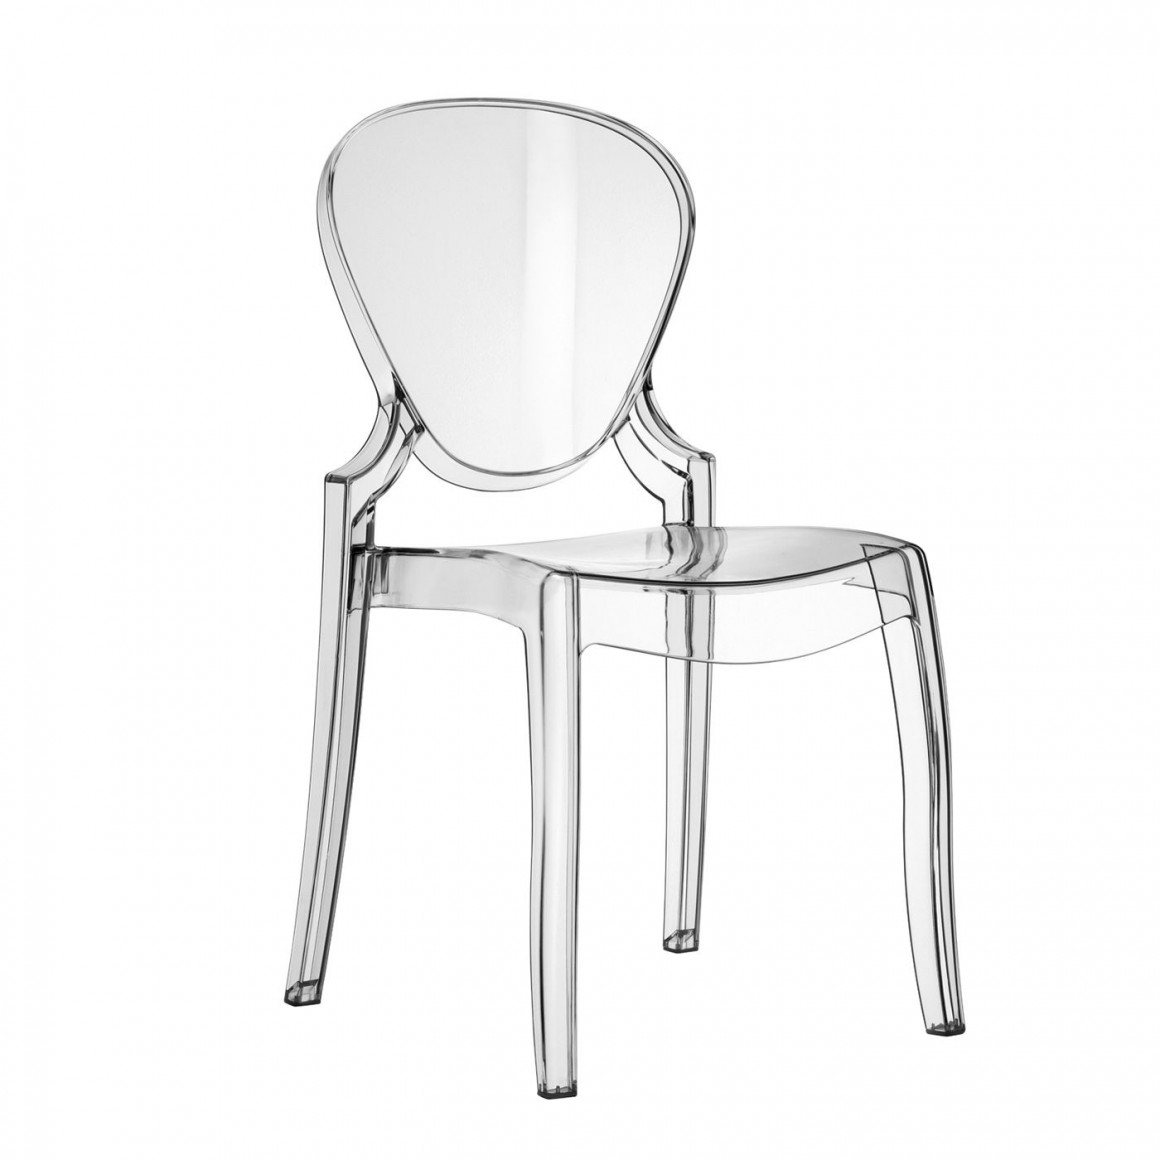 Chair QUEEN, trasparent polycarbonate